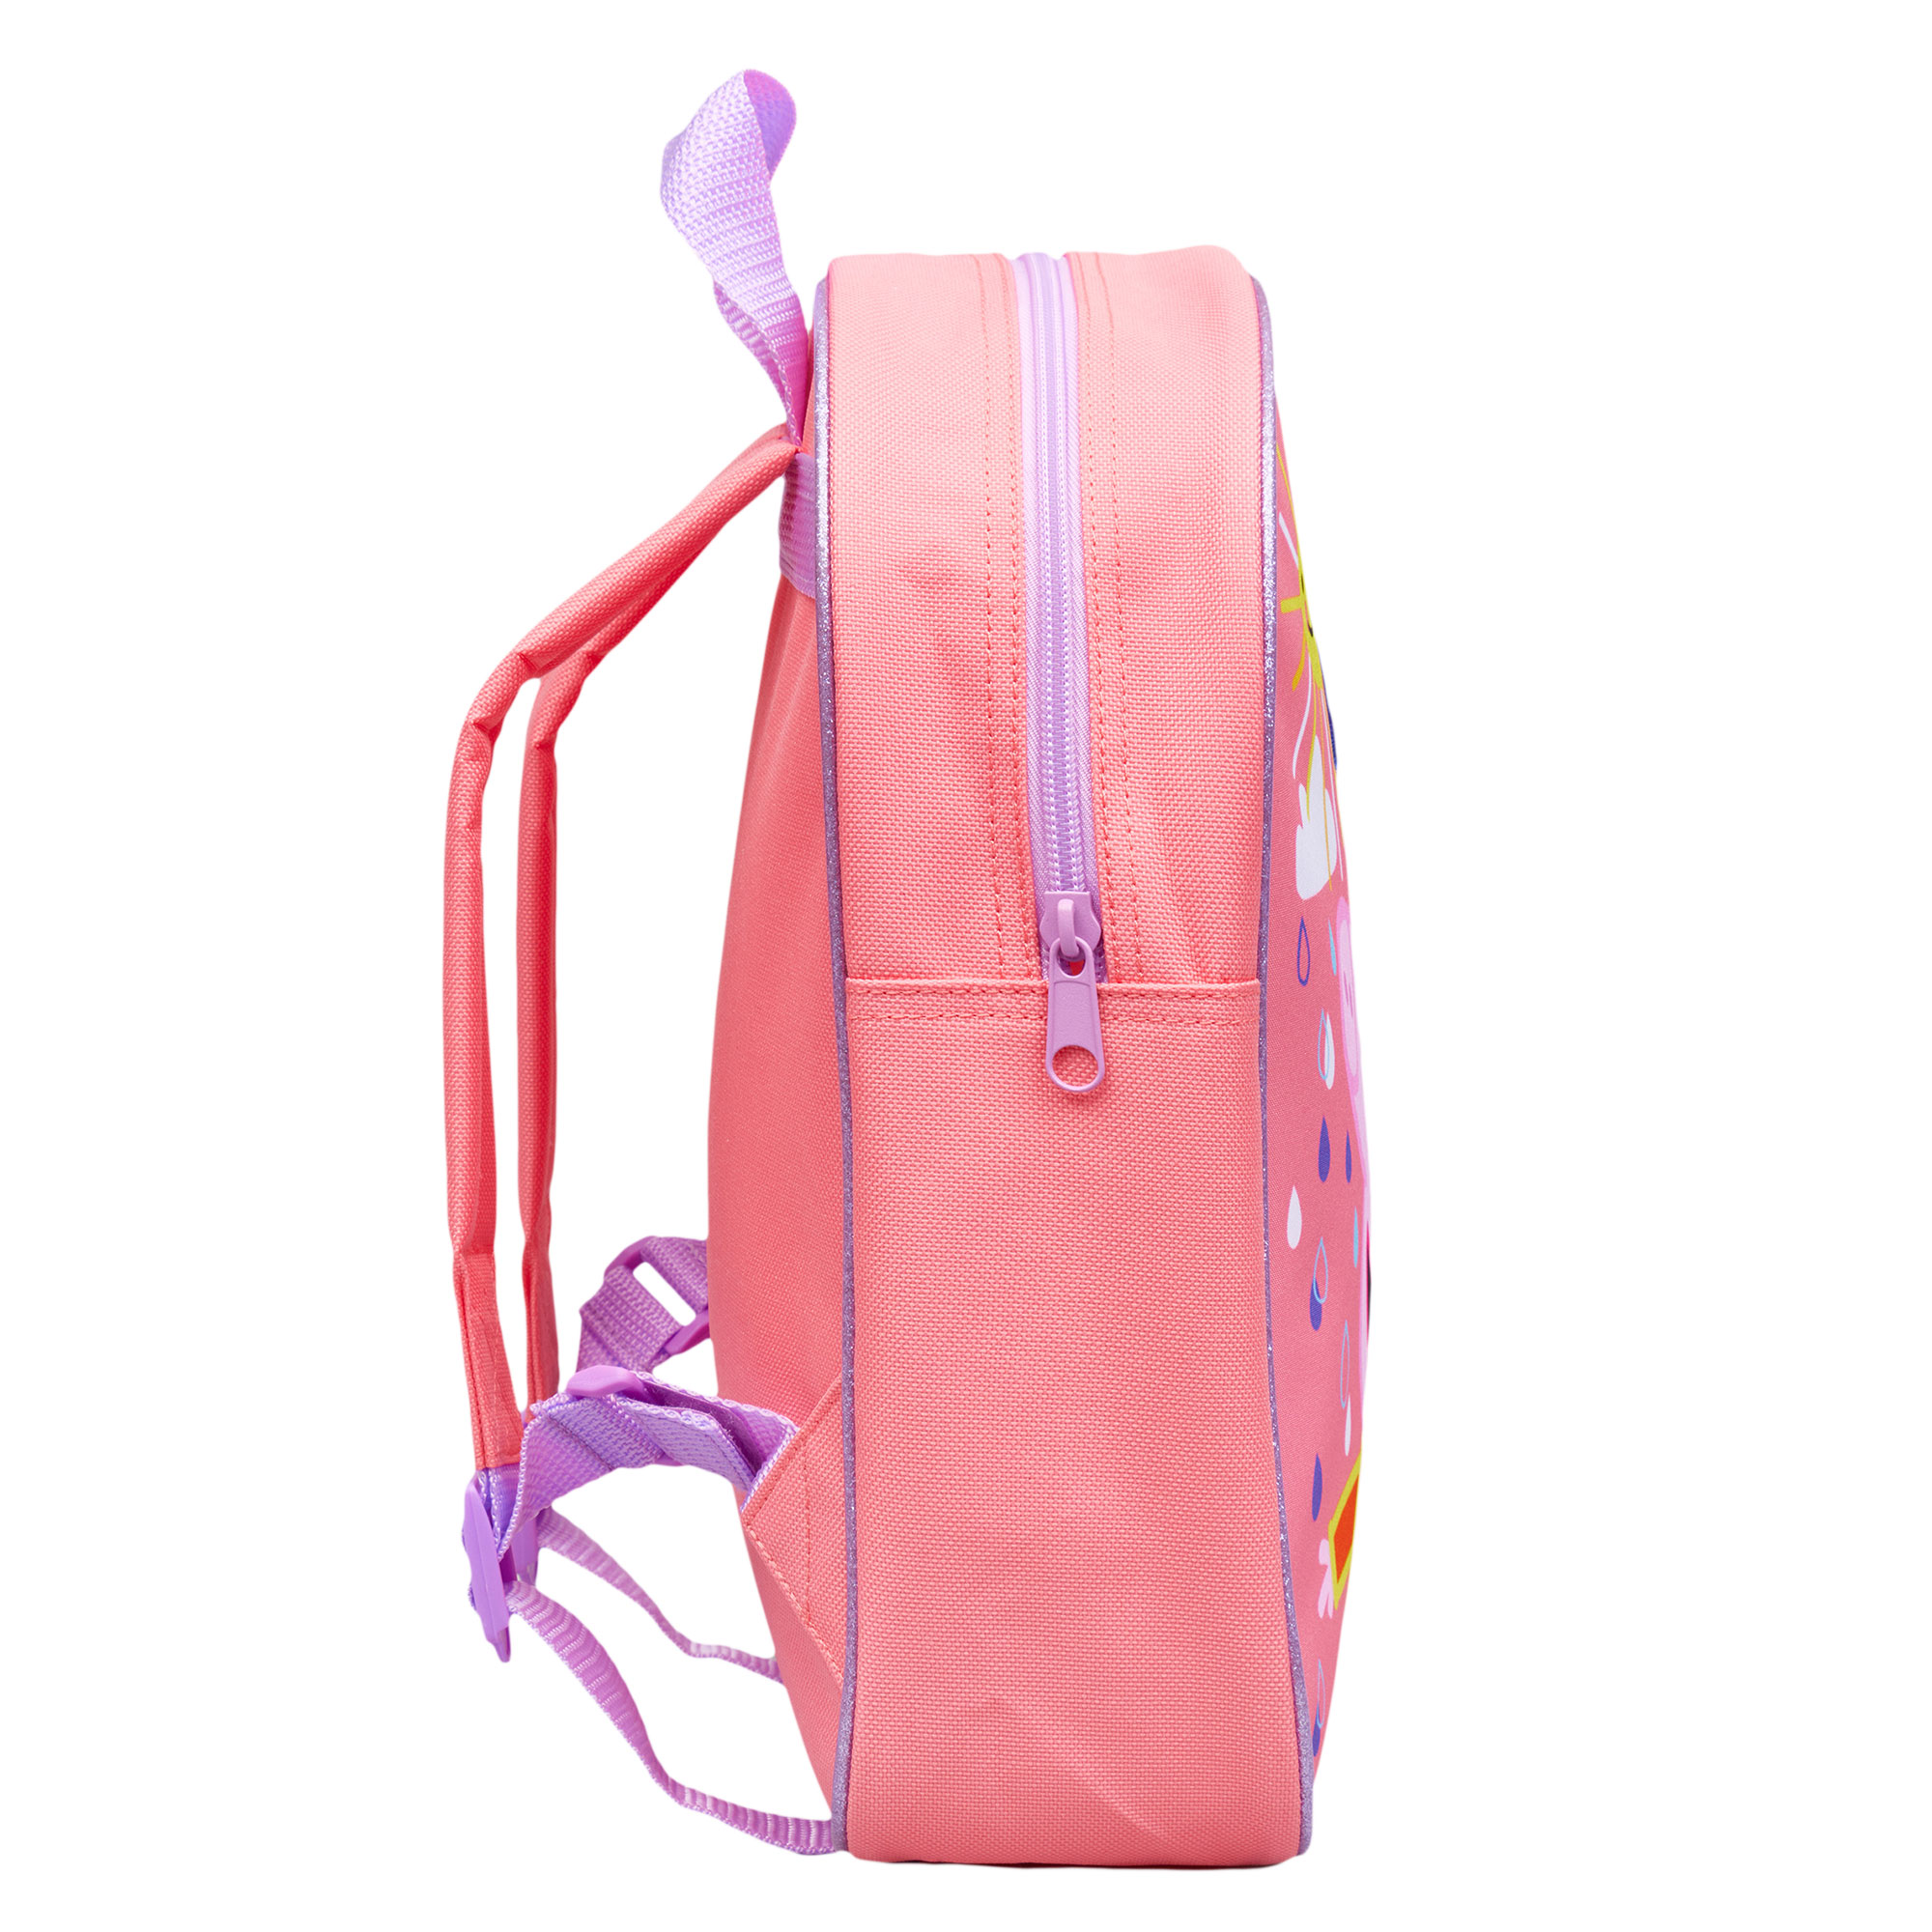 Peppa Pig Glitter Umbrella Backpack